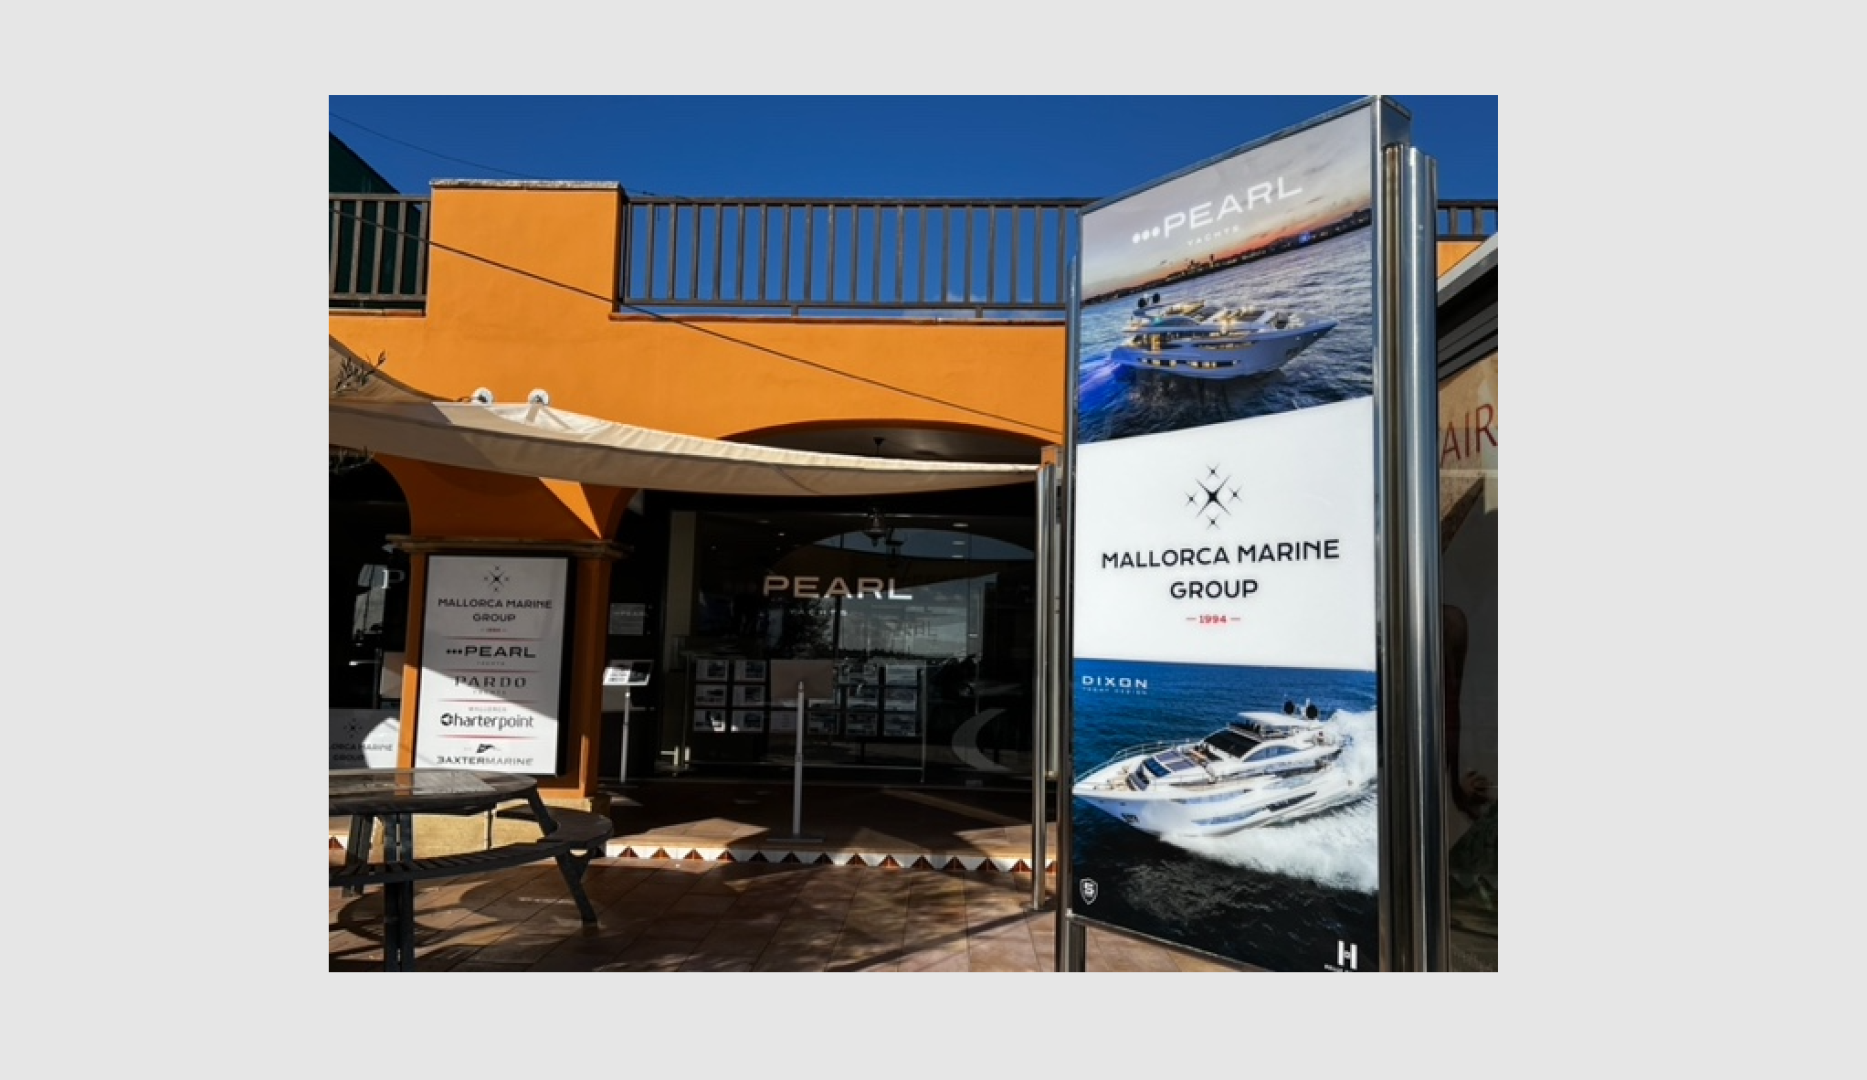 Mallorca Marine Group Launches in Puerto Portals